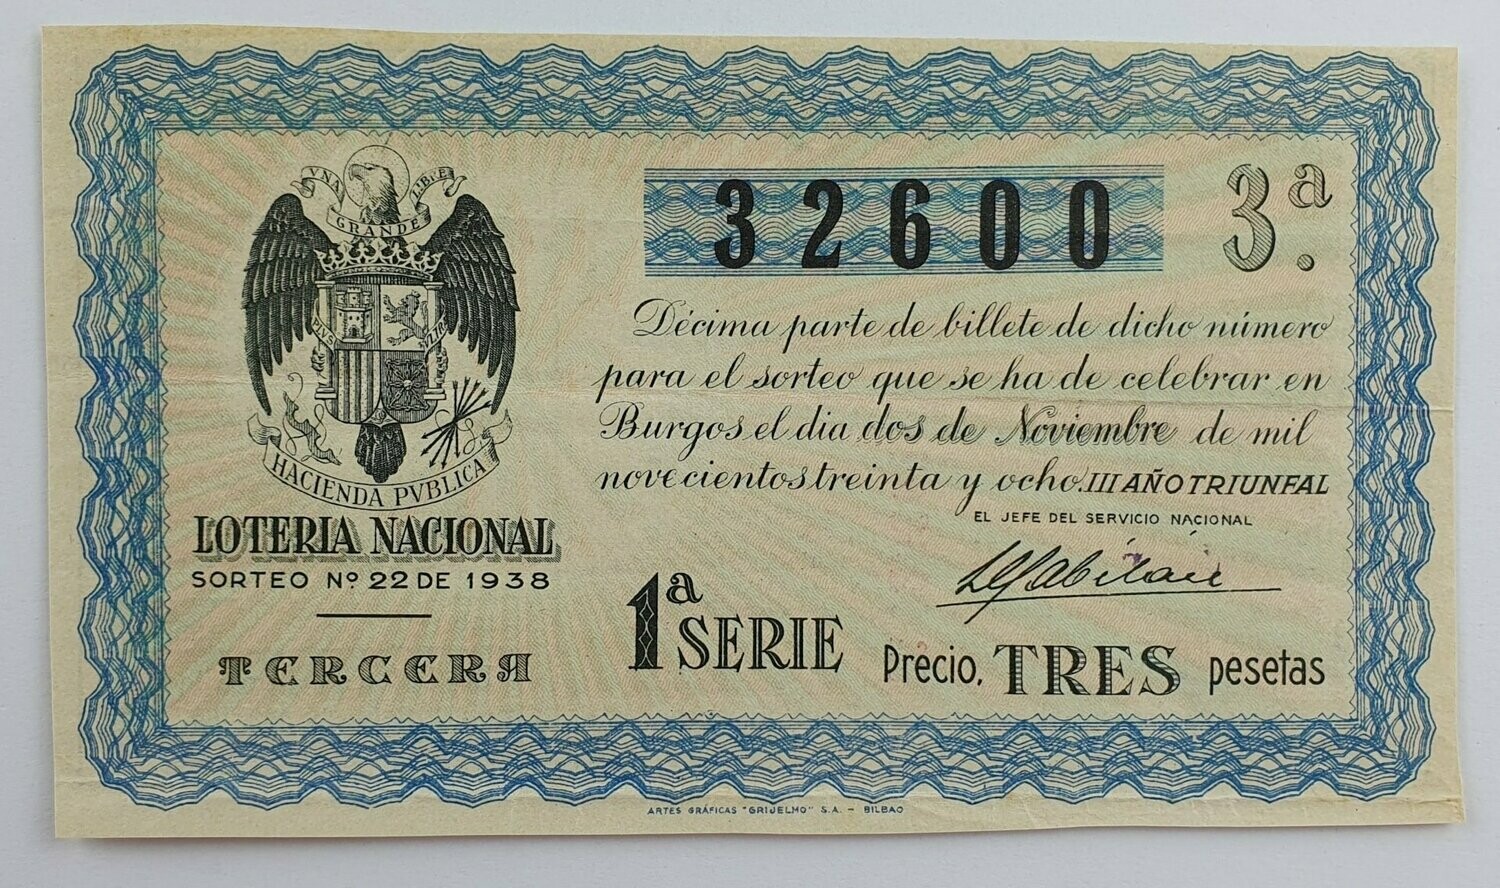 LOTERIA NACIONAL. SORTEO Nº 22 DEL 2 DE NOVIEMBRE DE 1938